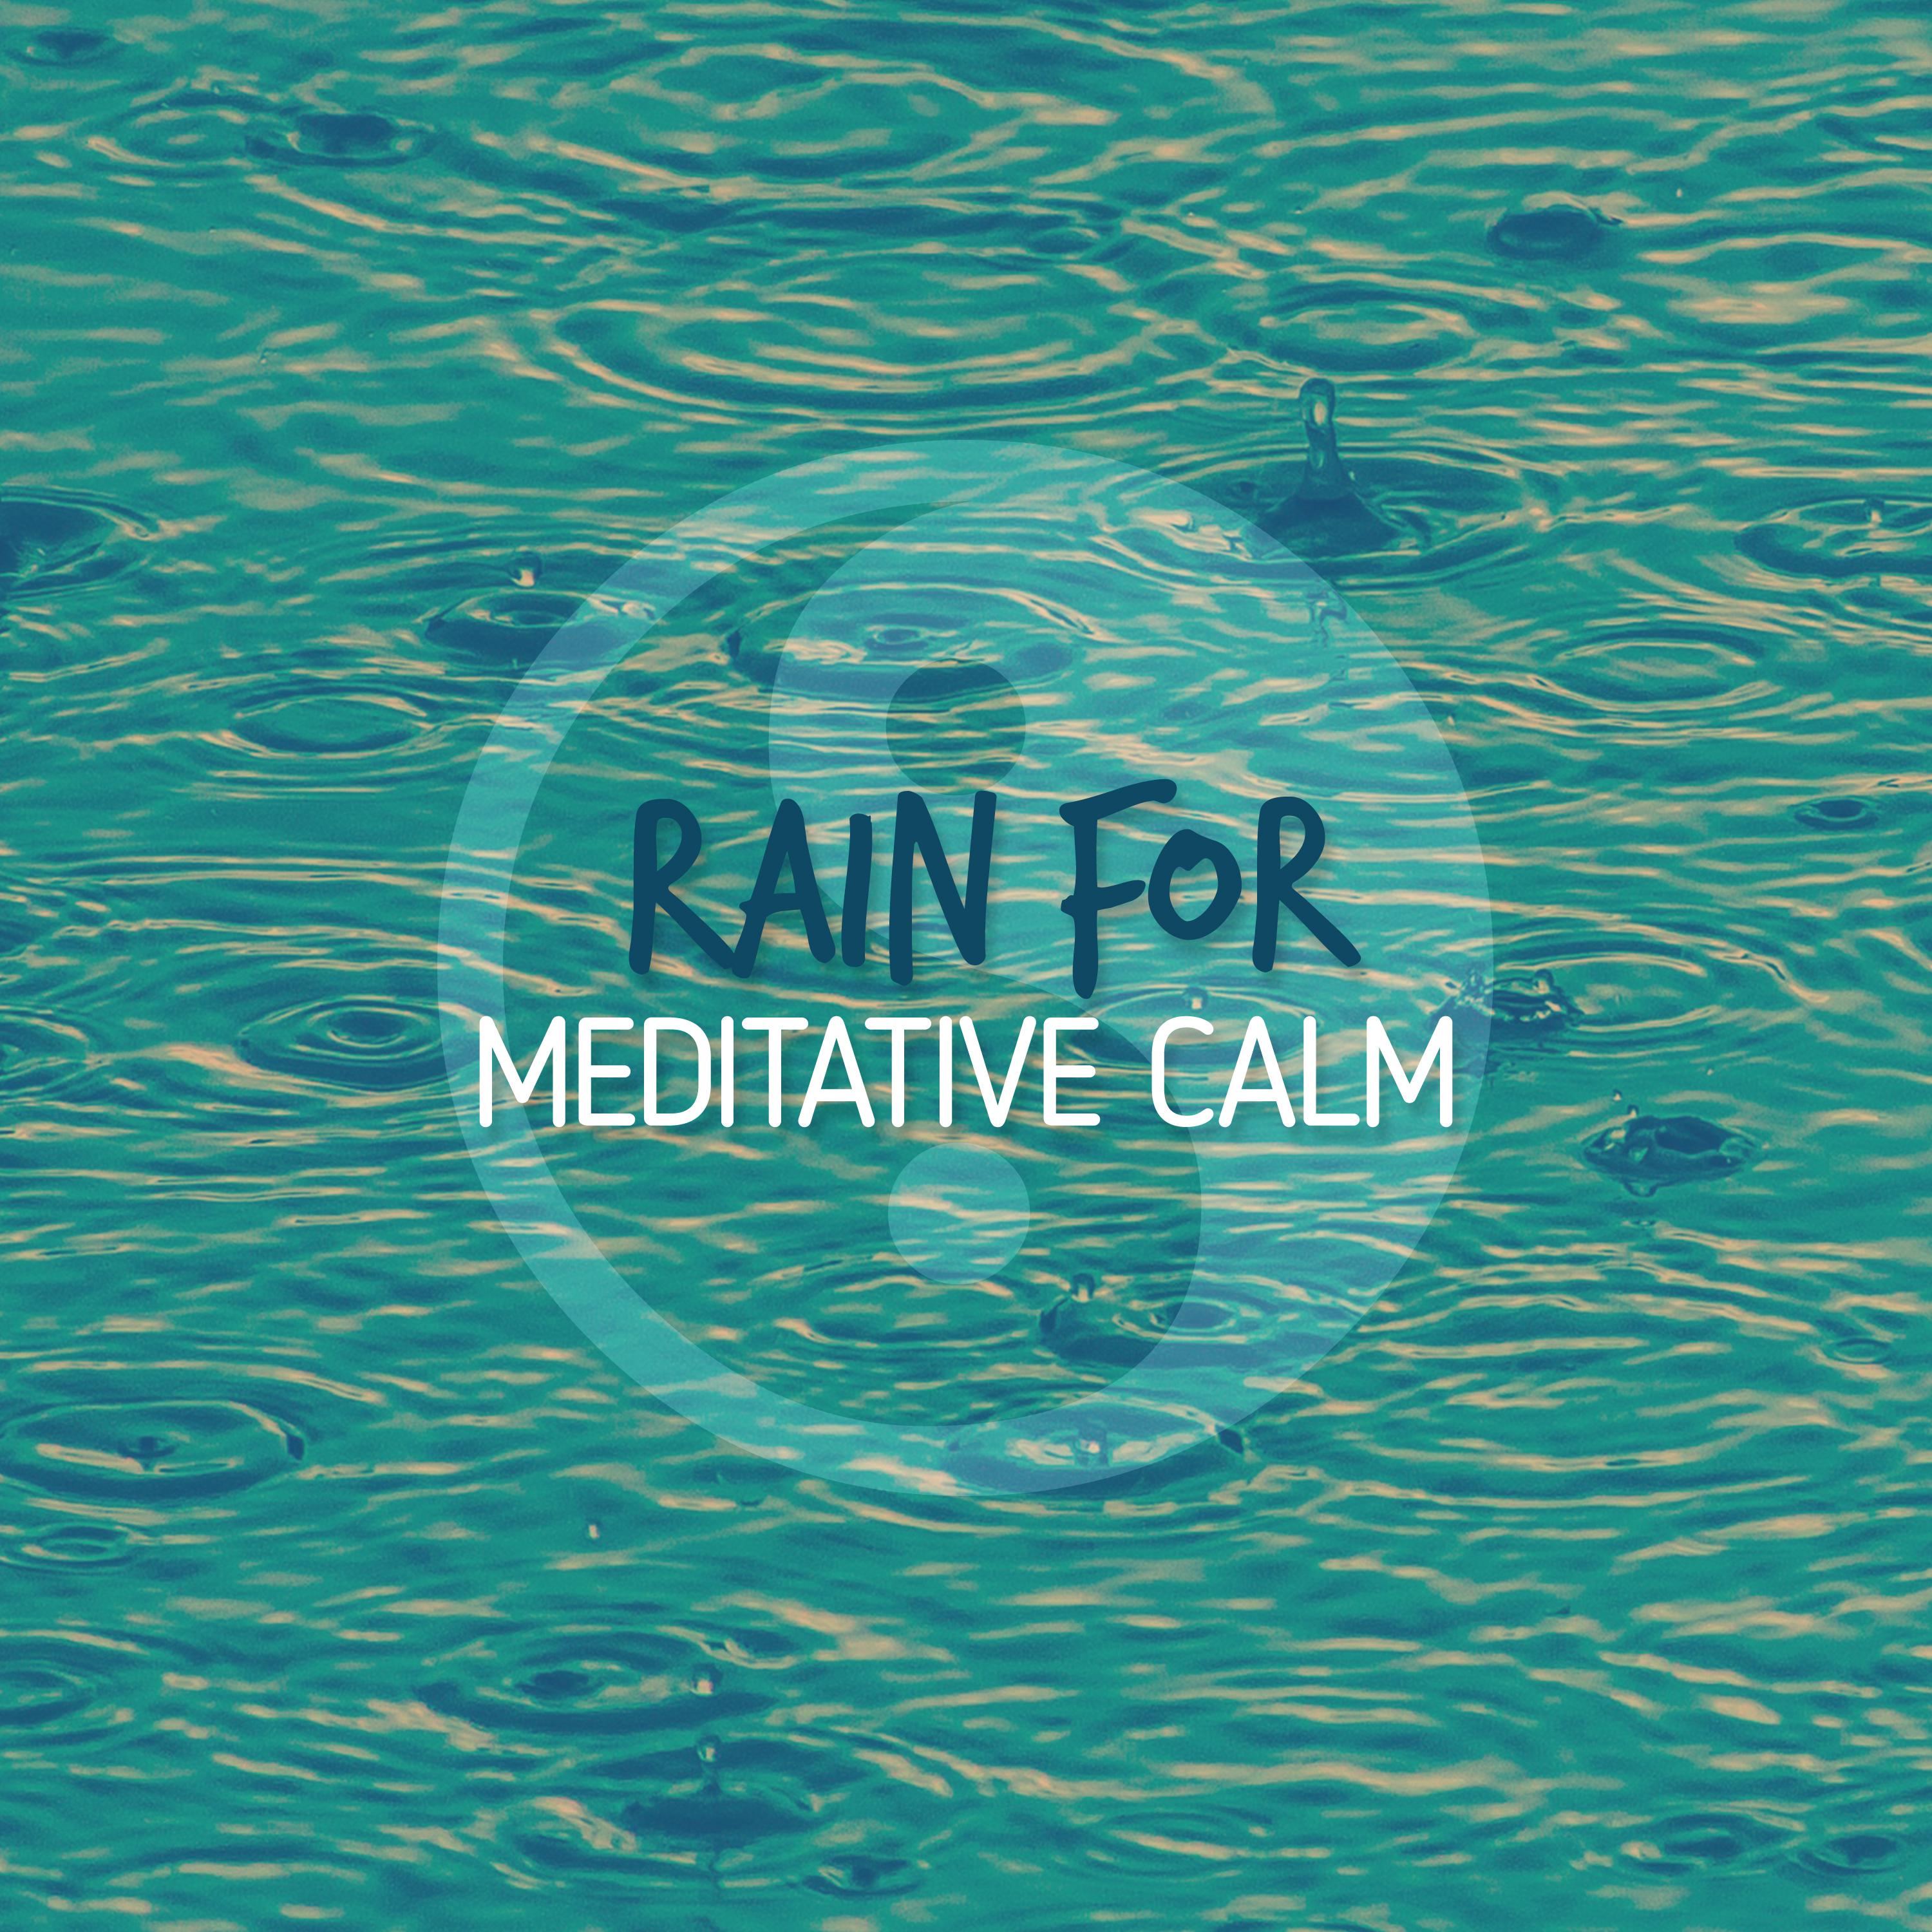 Rain for Meditative Calm